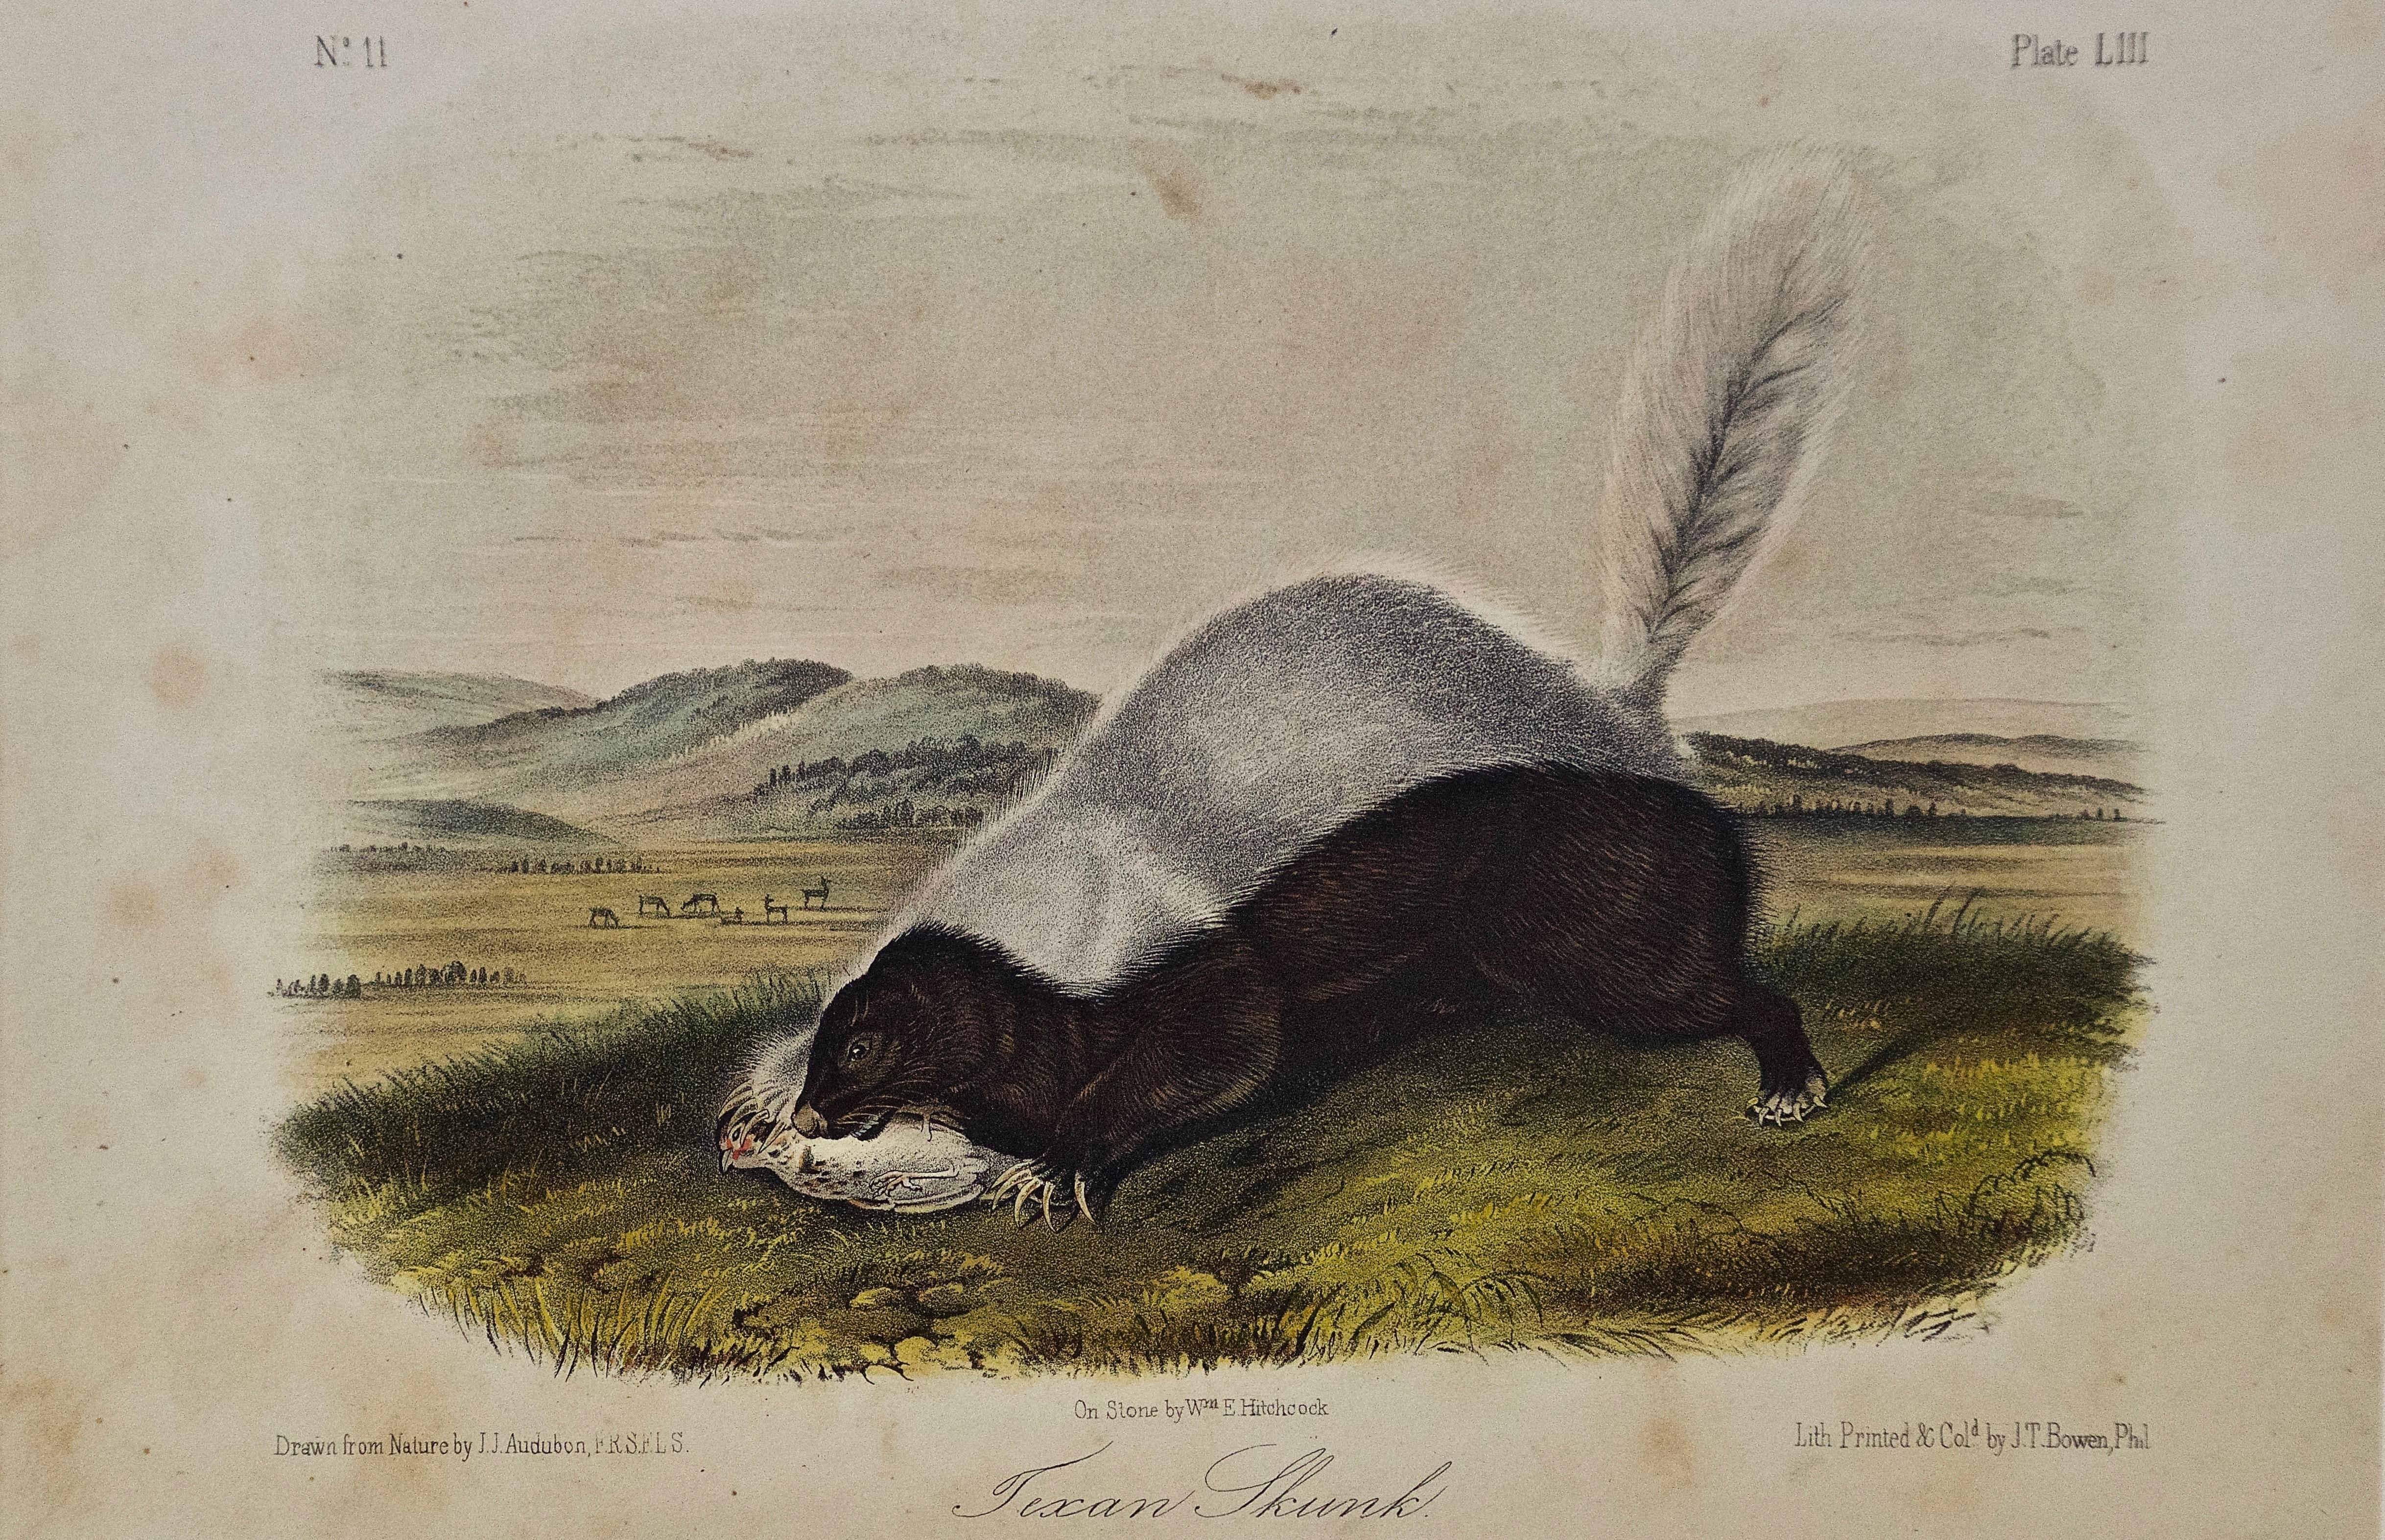 John James Audubon Animal Print - Original Audubon Hand Colored Lithograph of a "Texan Skunk"